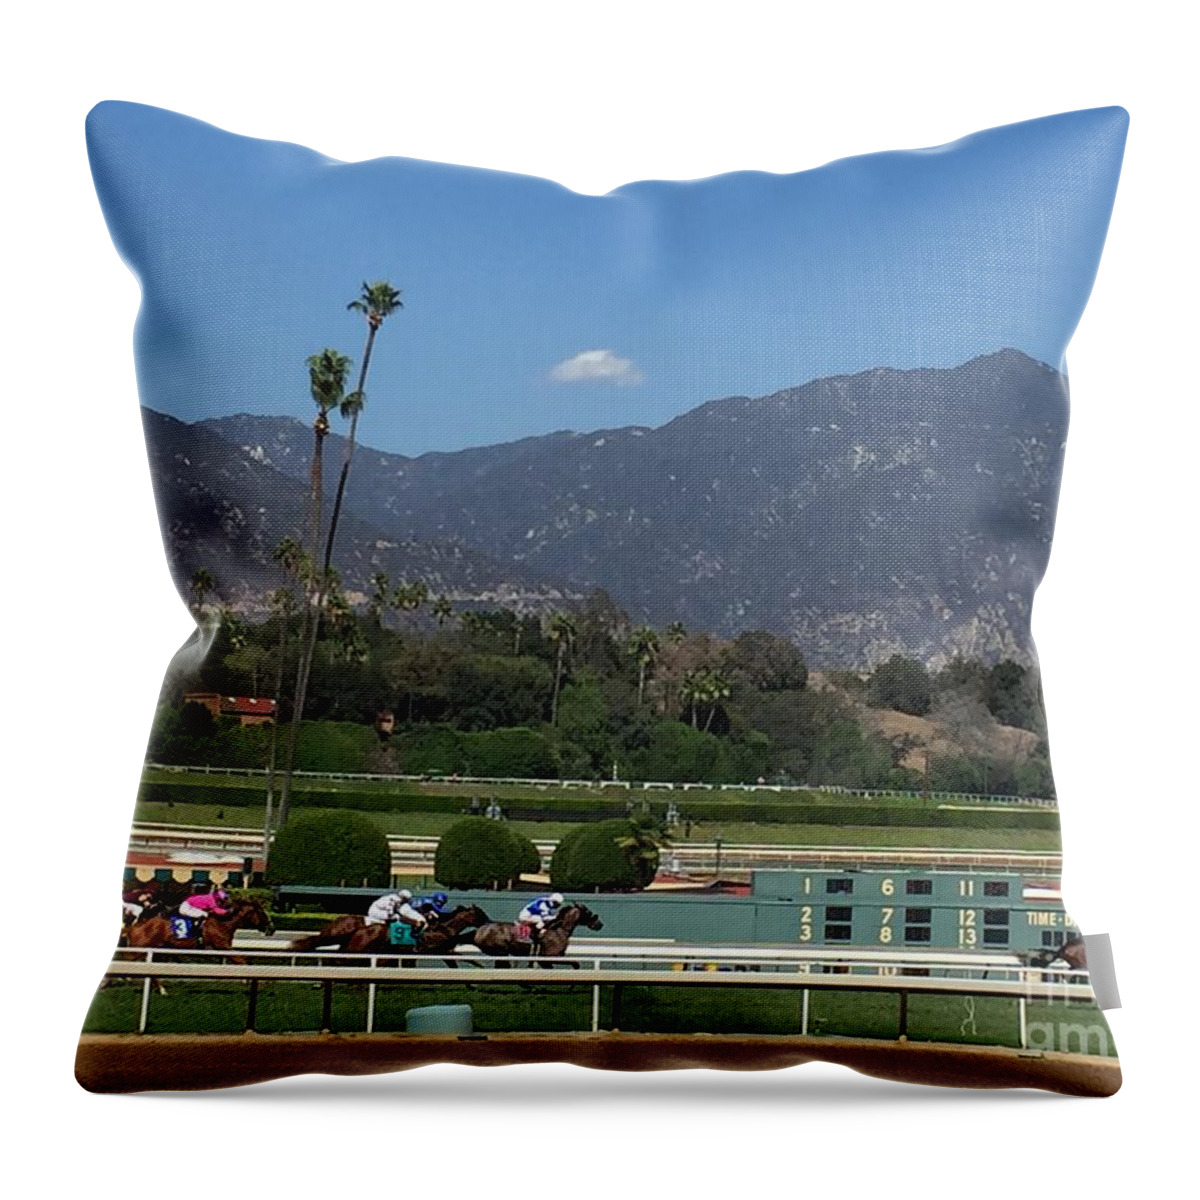 500 Views Throw Pillow featuring the photograph Santa Anita 3 by Jenny Revitz Soper